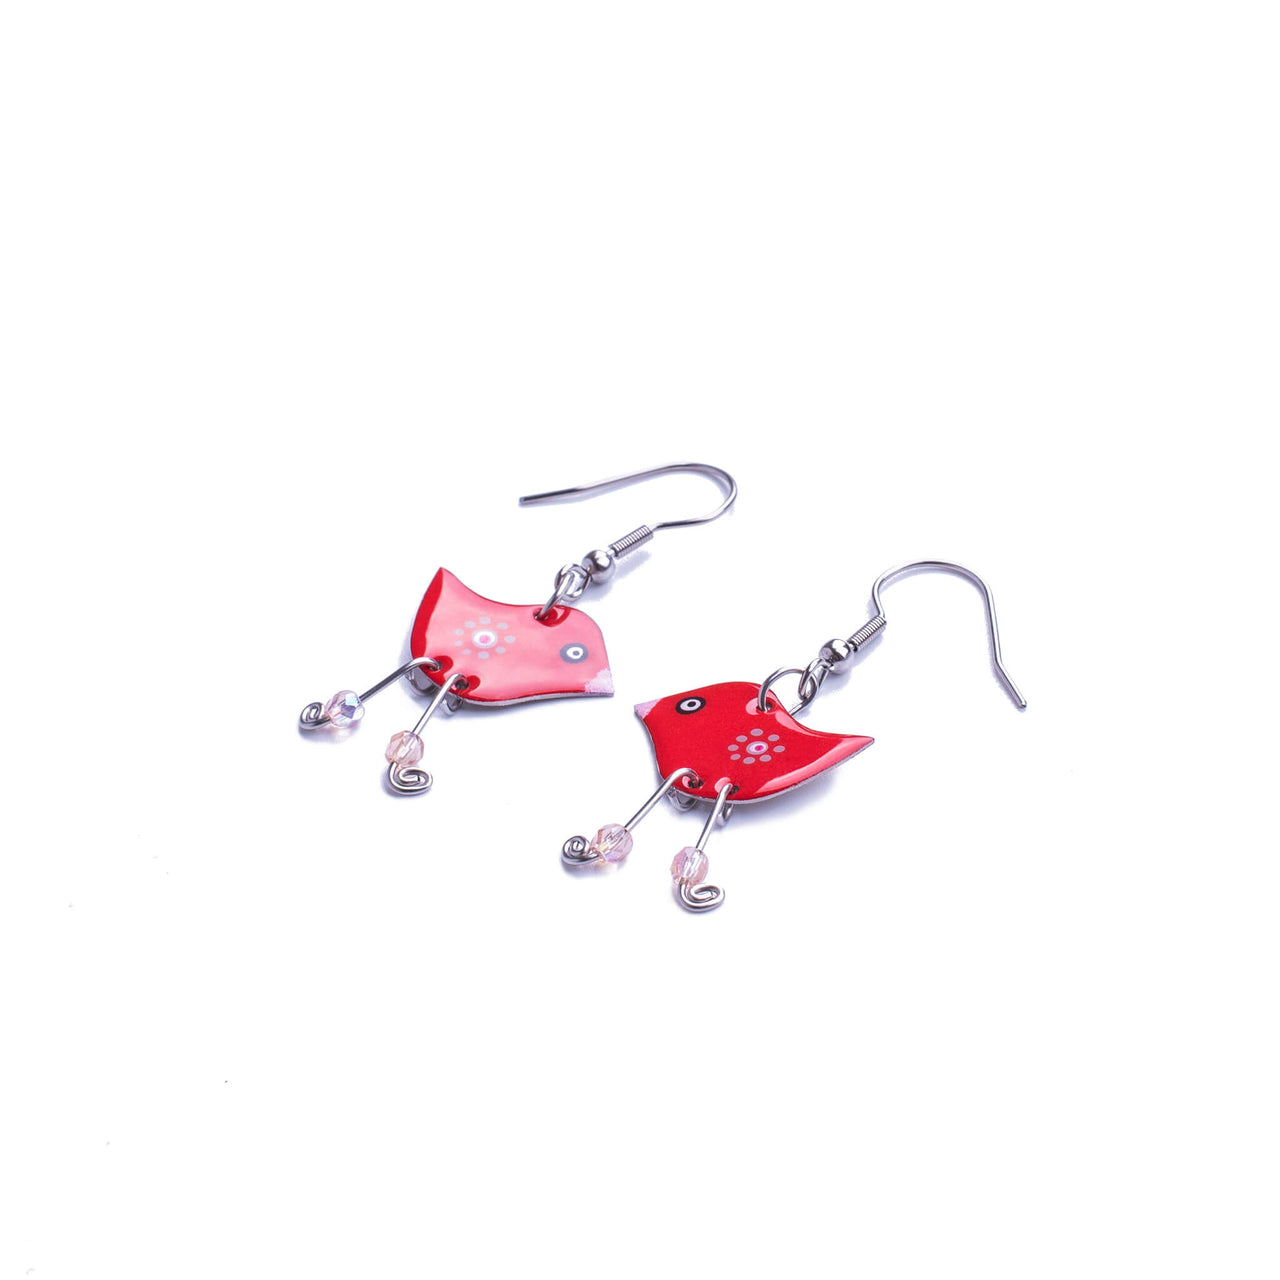 Red Bird Earrings with Dangle Legs